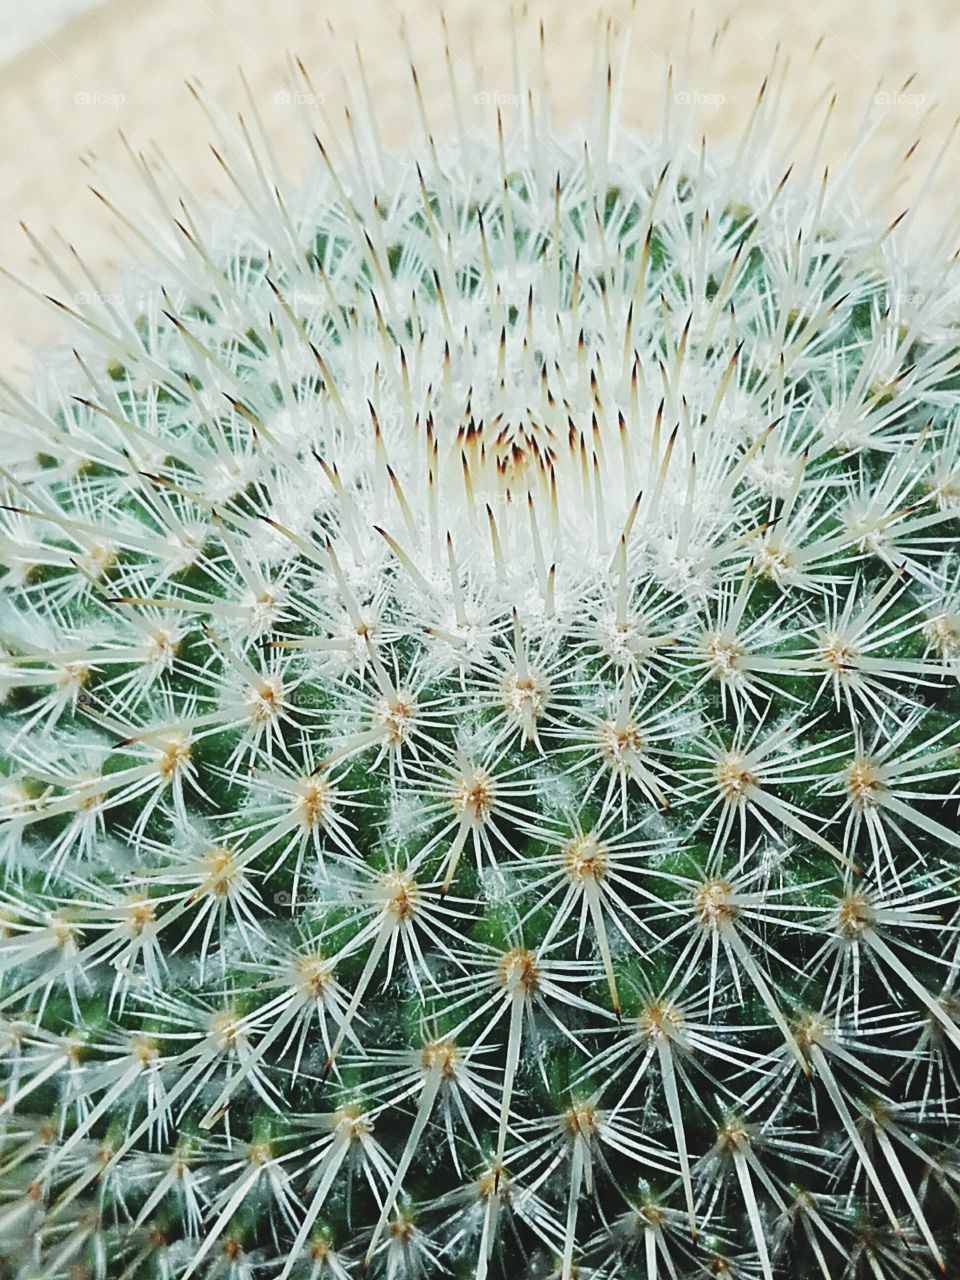 Cactus, Succulent, Spine, Spike, Sharp